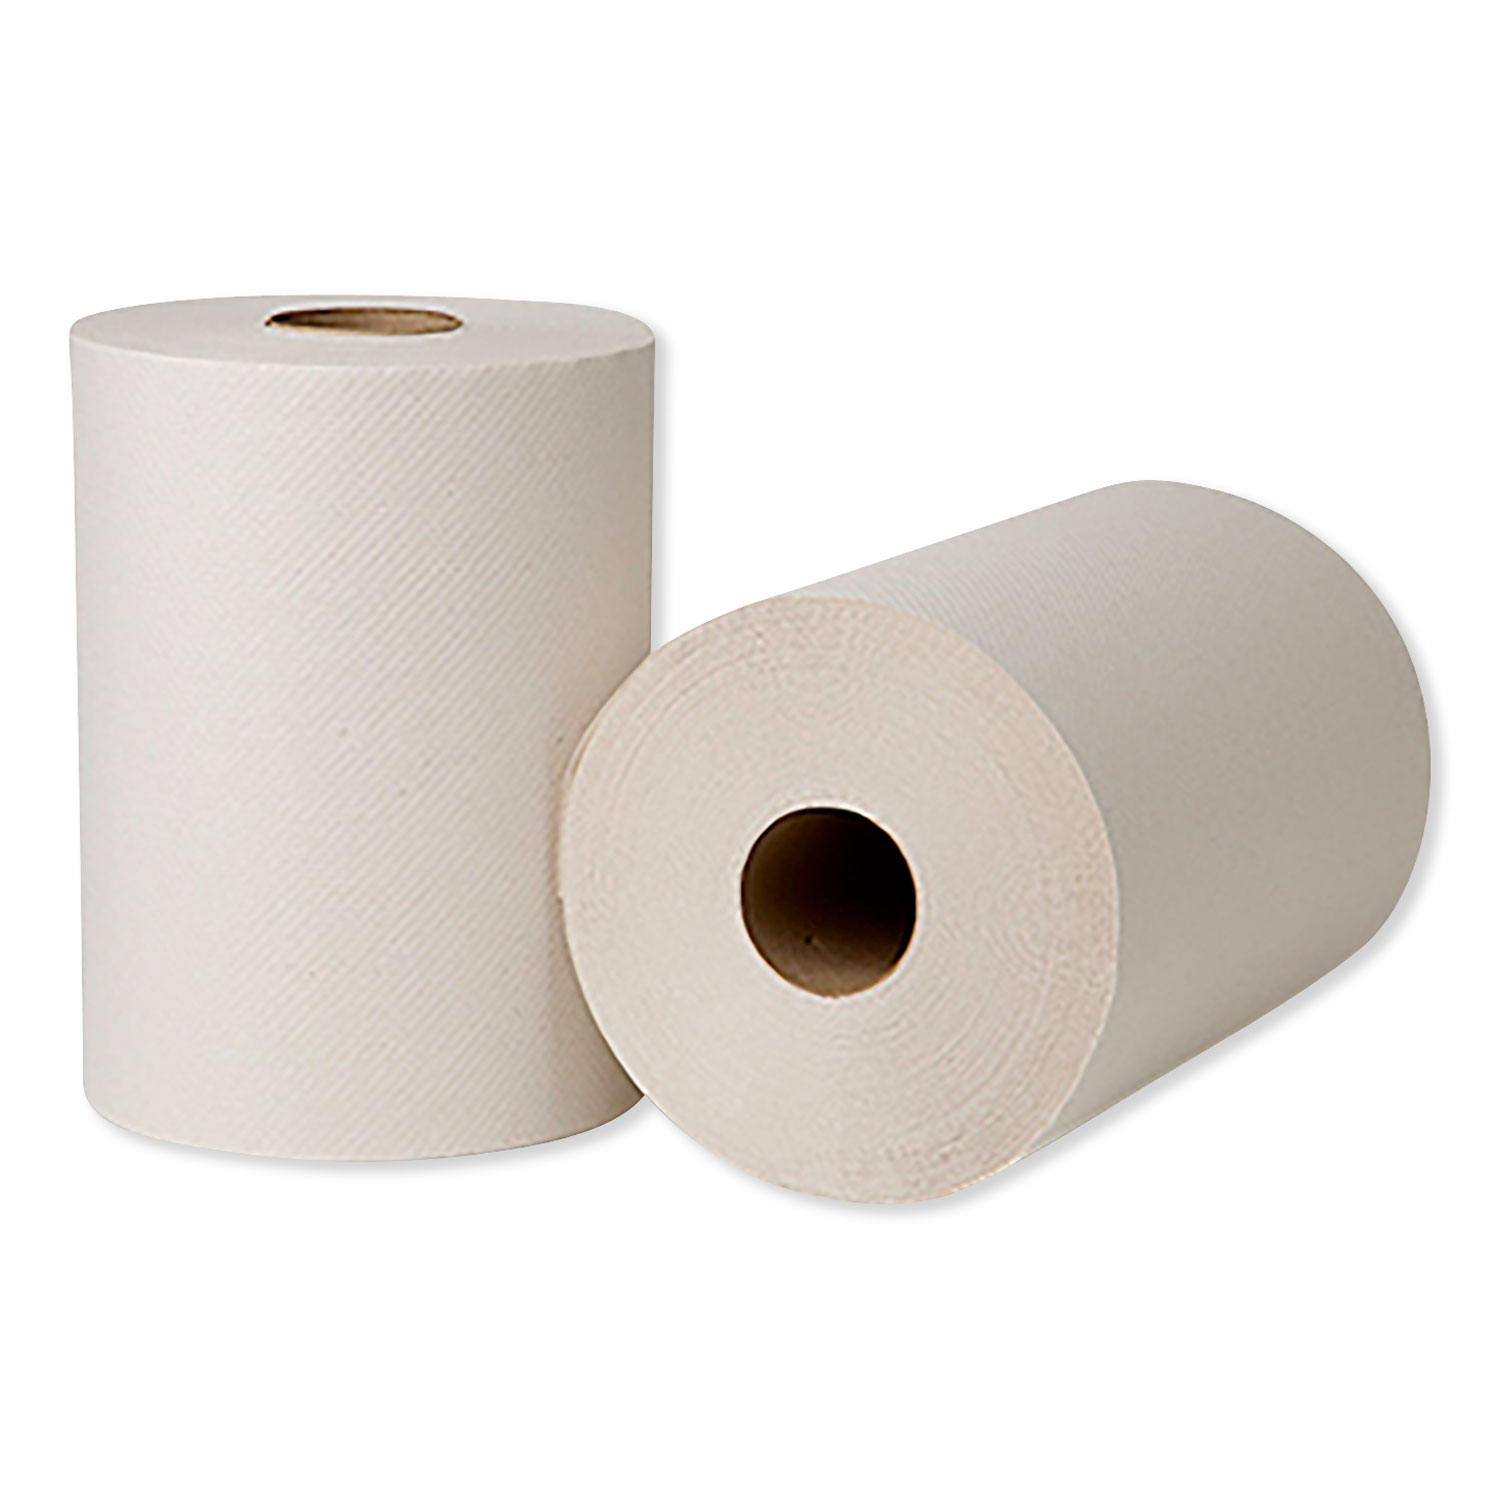  Tork 214250 Hardwound Roll Towels, 7.88 x 425 ft, Natural White (TRK214250) 